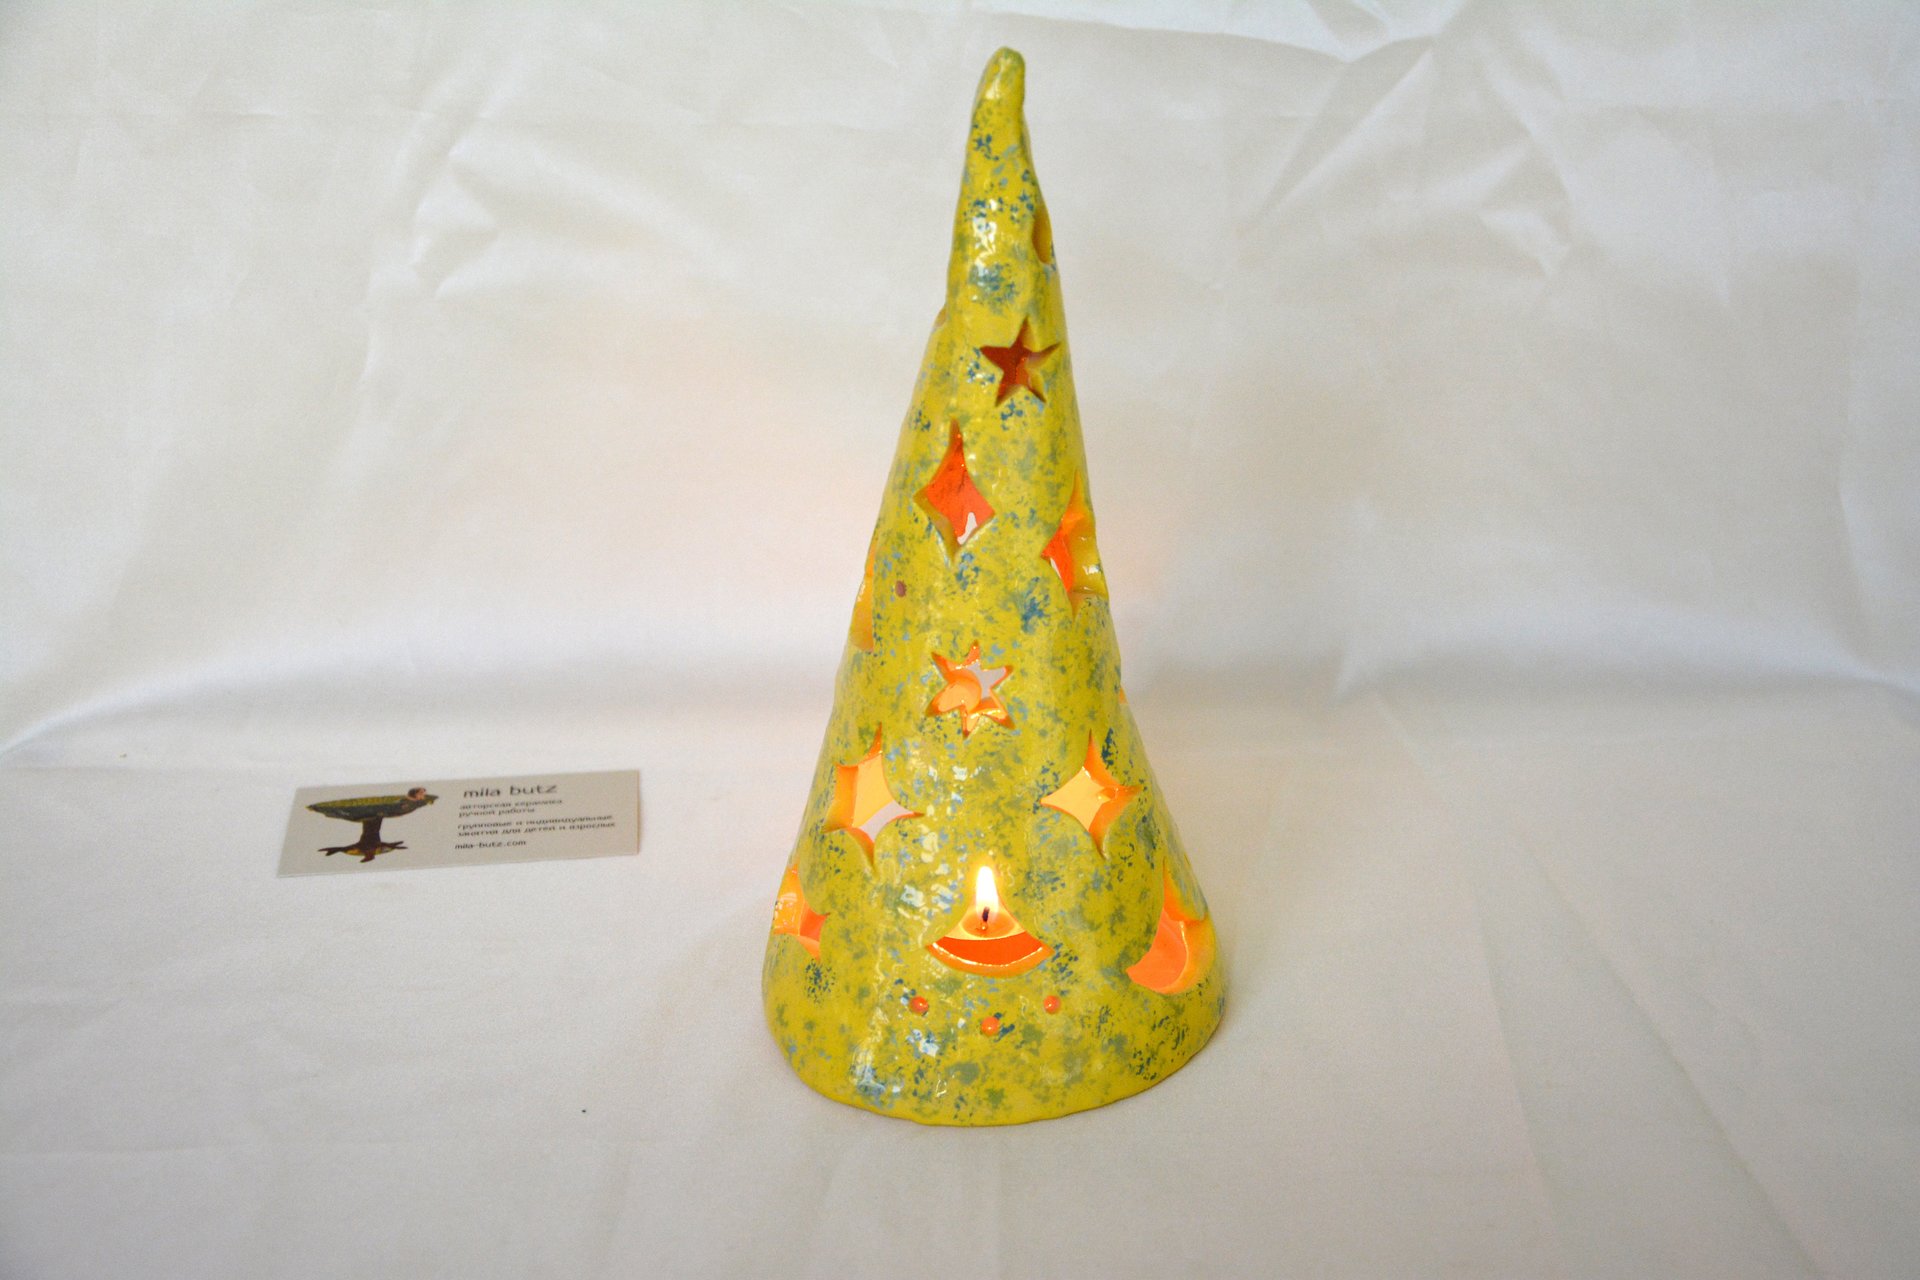 Night light Yellow cone - Ceramic Candl-holders, height - 25 cm, photo 2 of 3.